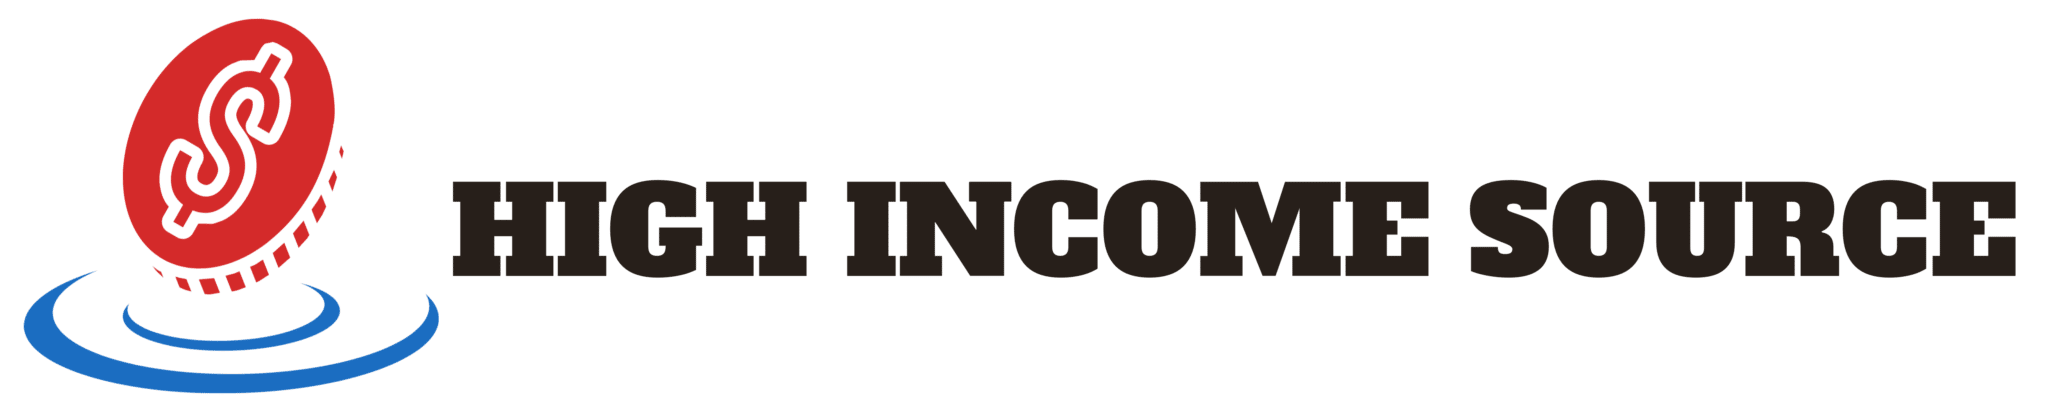 High Income Source Logo